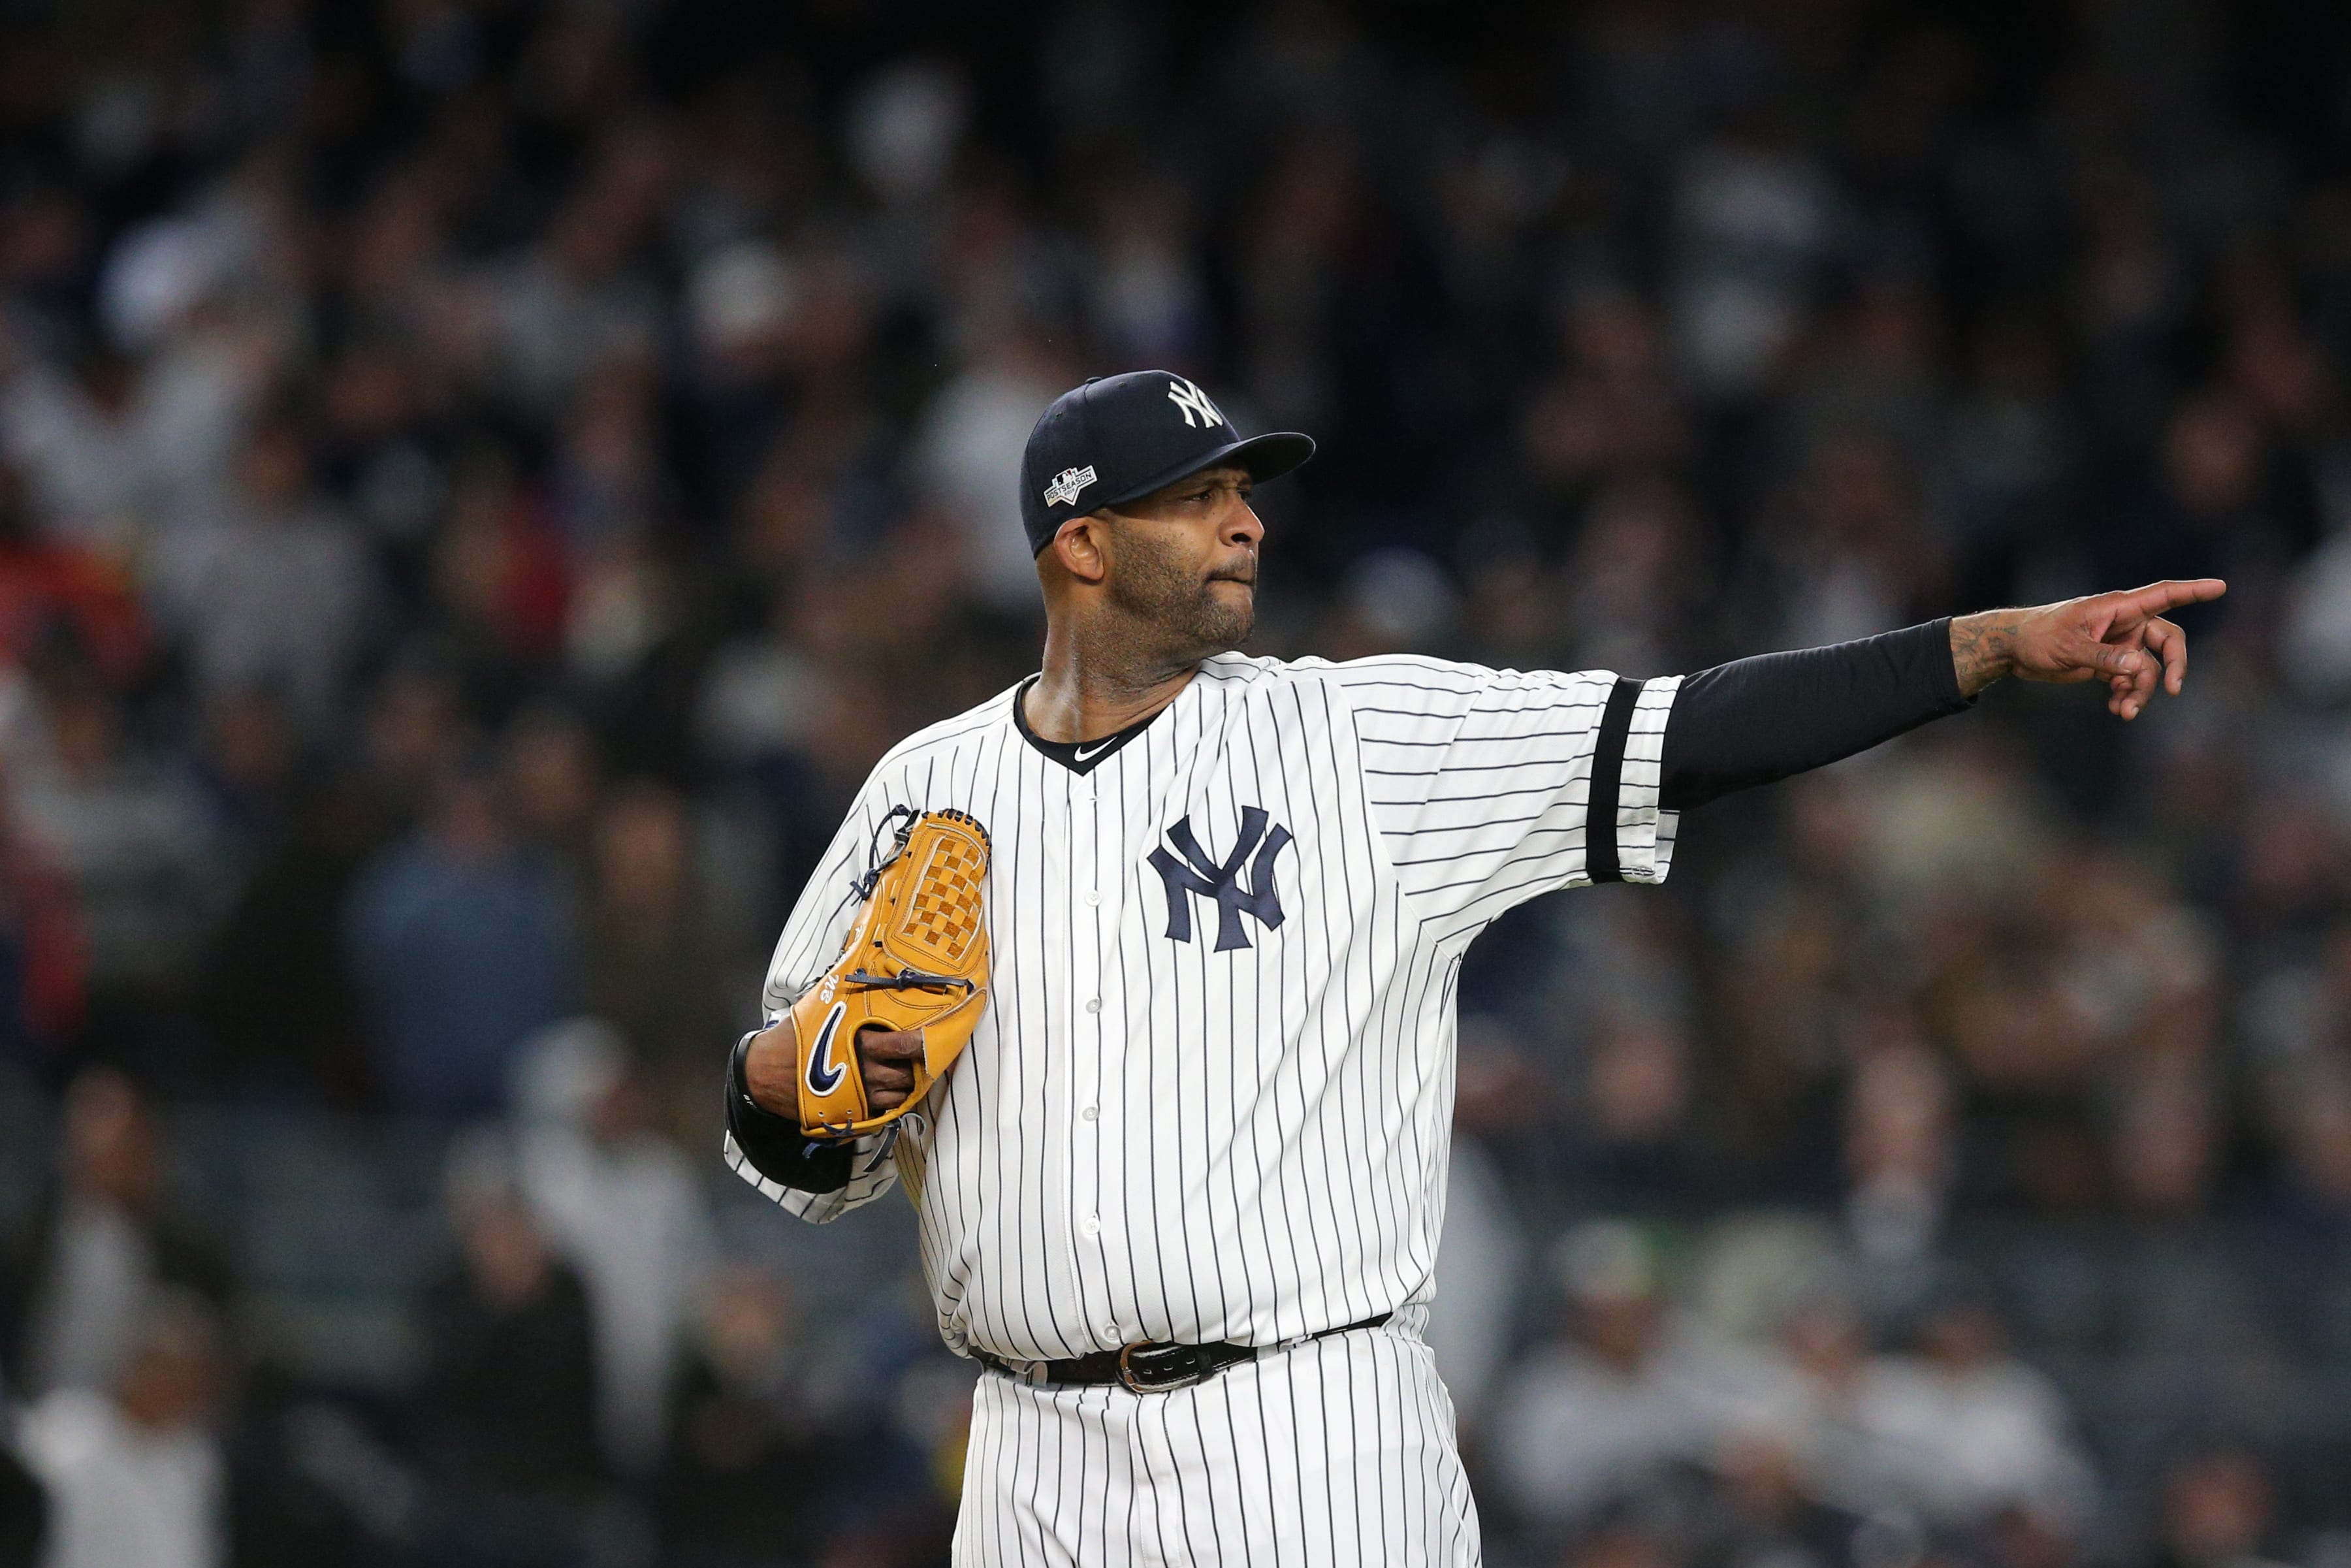 He s a clown : Former Yankees pitcher CC Sabathia slams Astros star